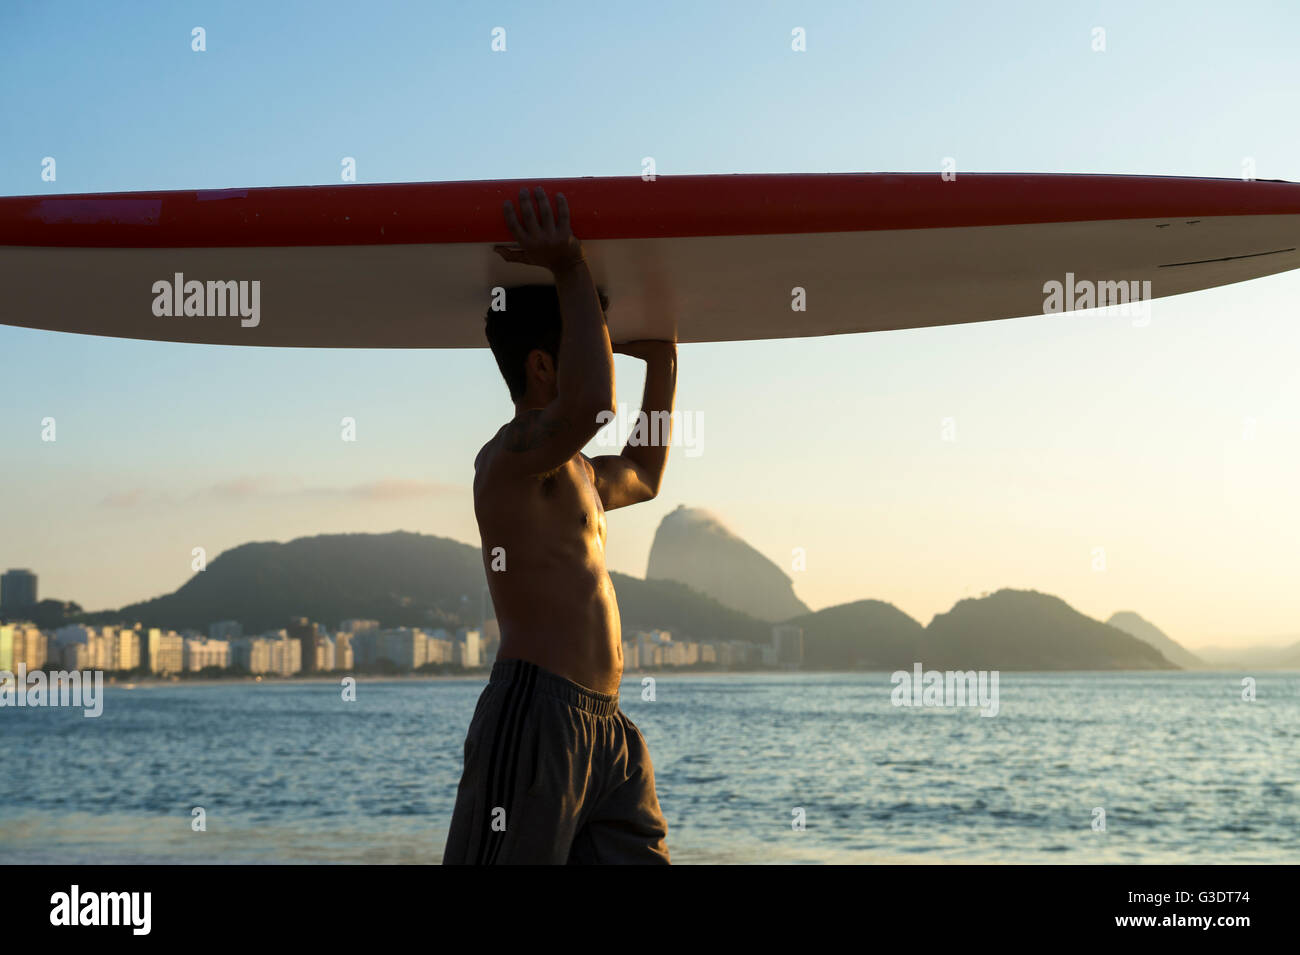 RIO DE JANEIRO - APRIL 5, 2016: A young Brazilian man on Copacabana Beach carries a surfboard in front of Sugarloaf Mountain. Stock Photo